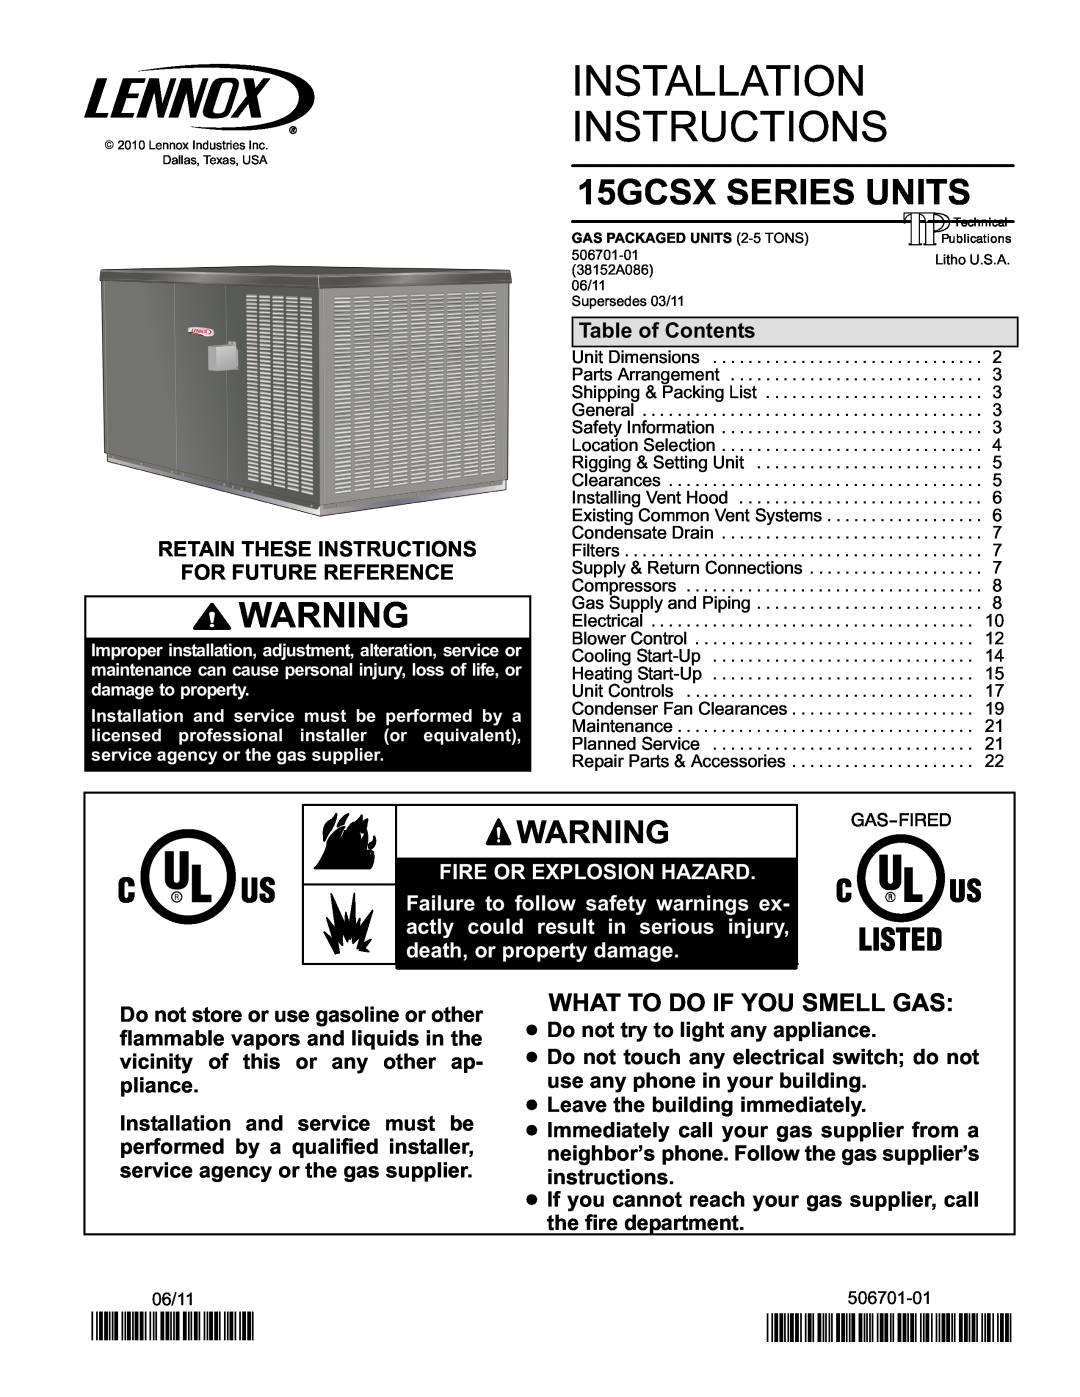 Lennox International Inc Gas Packaged Units installation instructions Installation Instructions, 15GCSX SERIES UNITS 